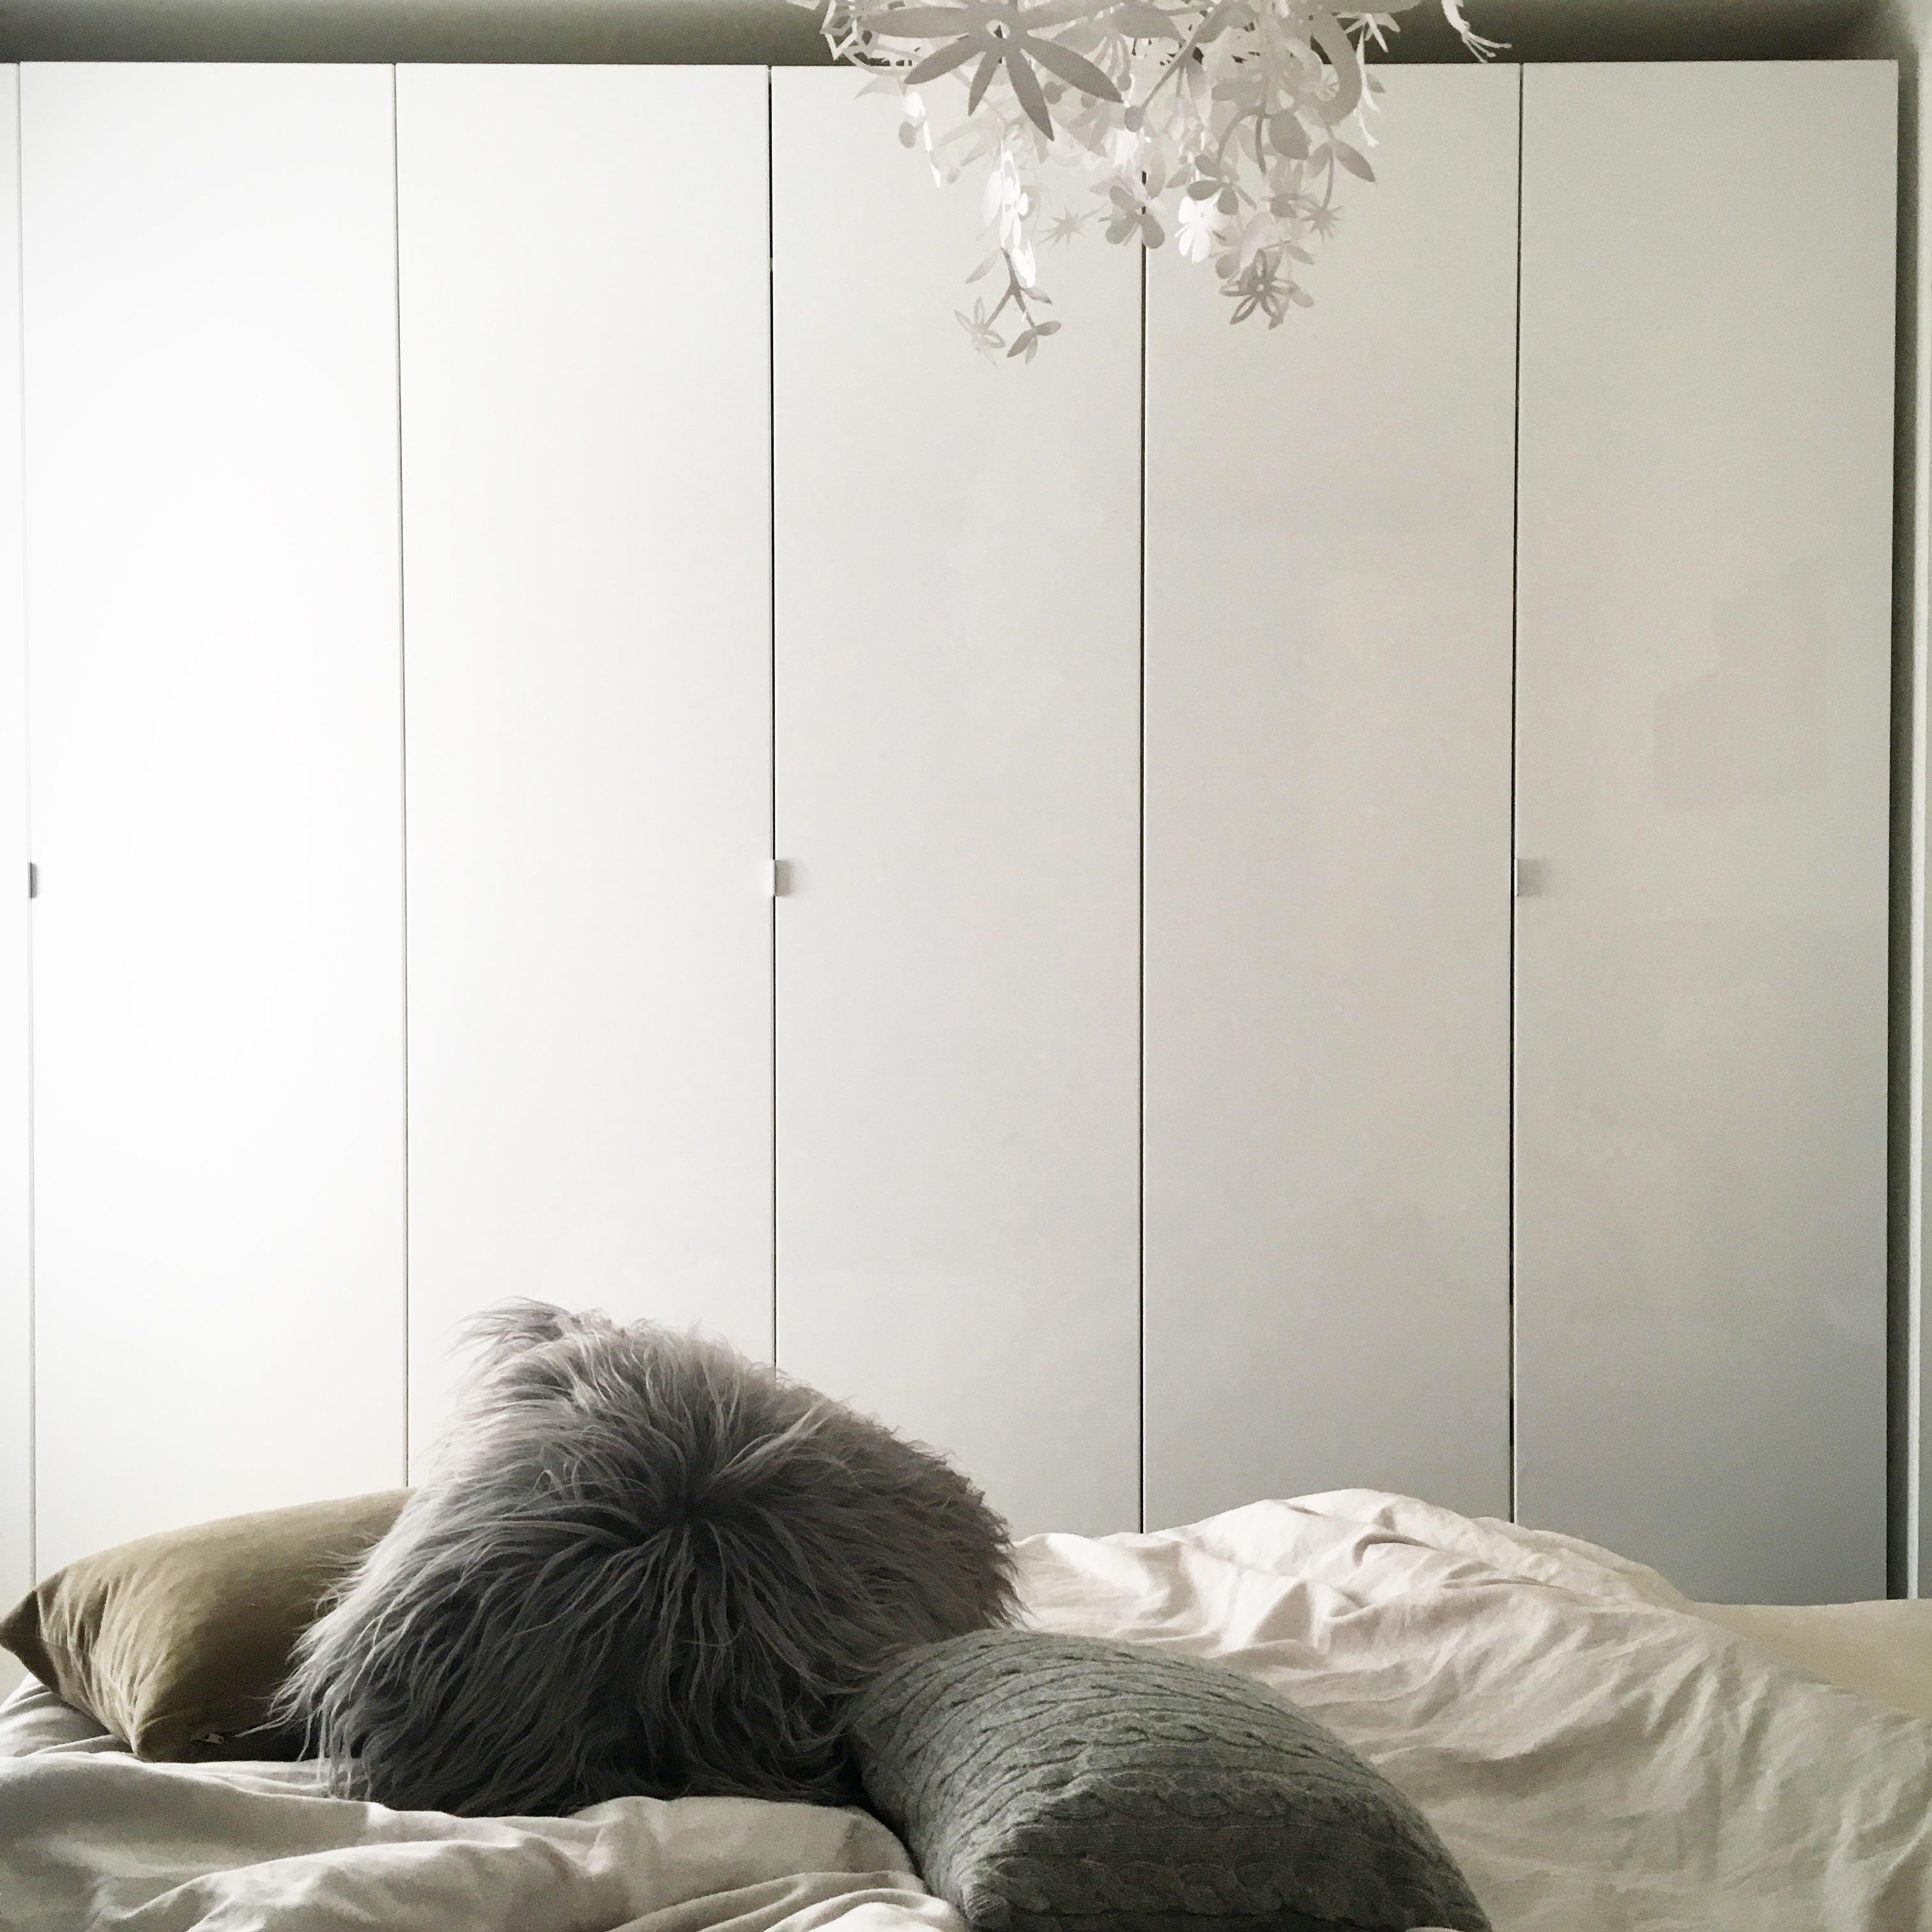 Stay in bed #bett #bettwäsche #schrank #ikea #lammfell ©ALL ABOUT DESIGN by Christina Harmsen